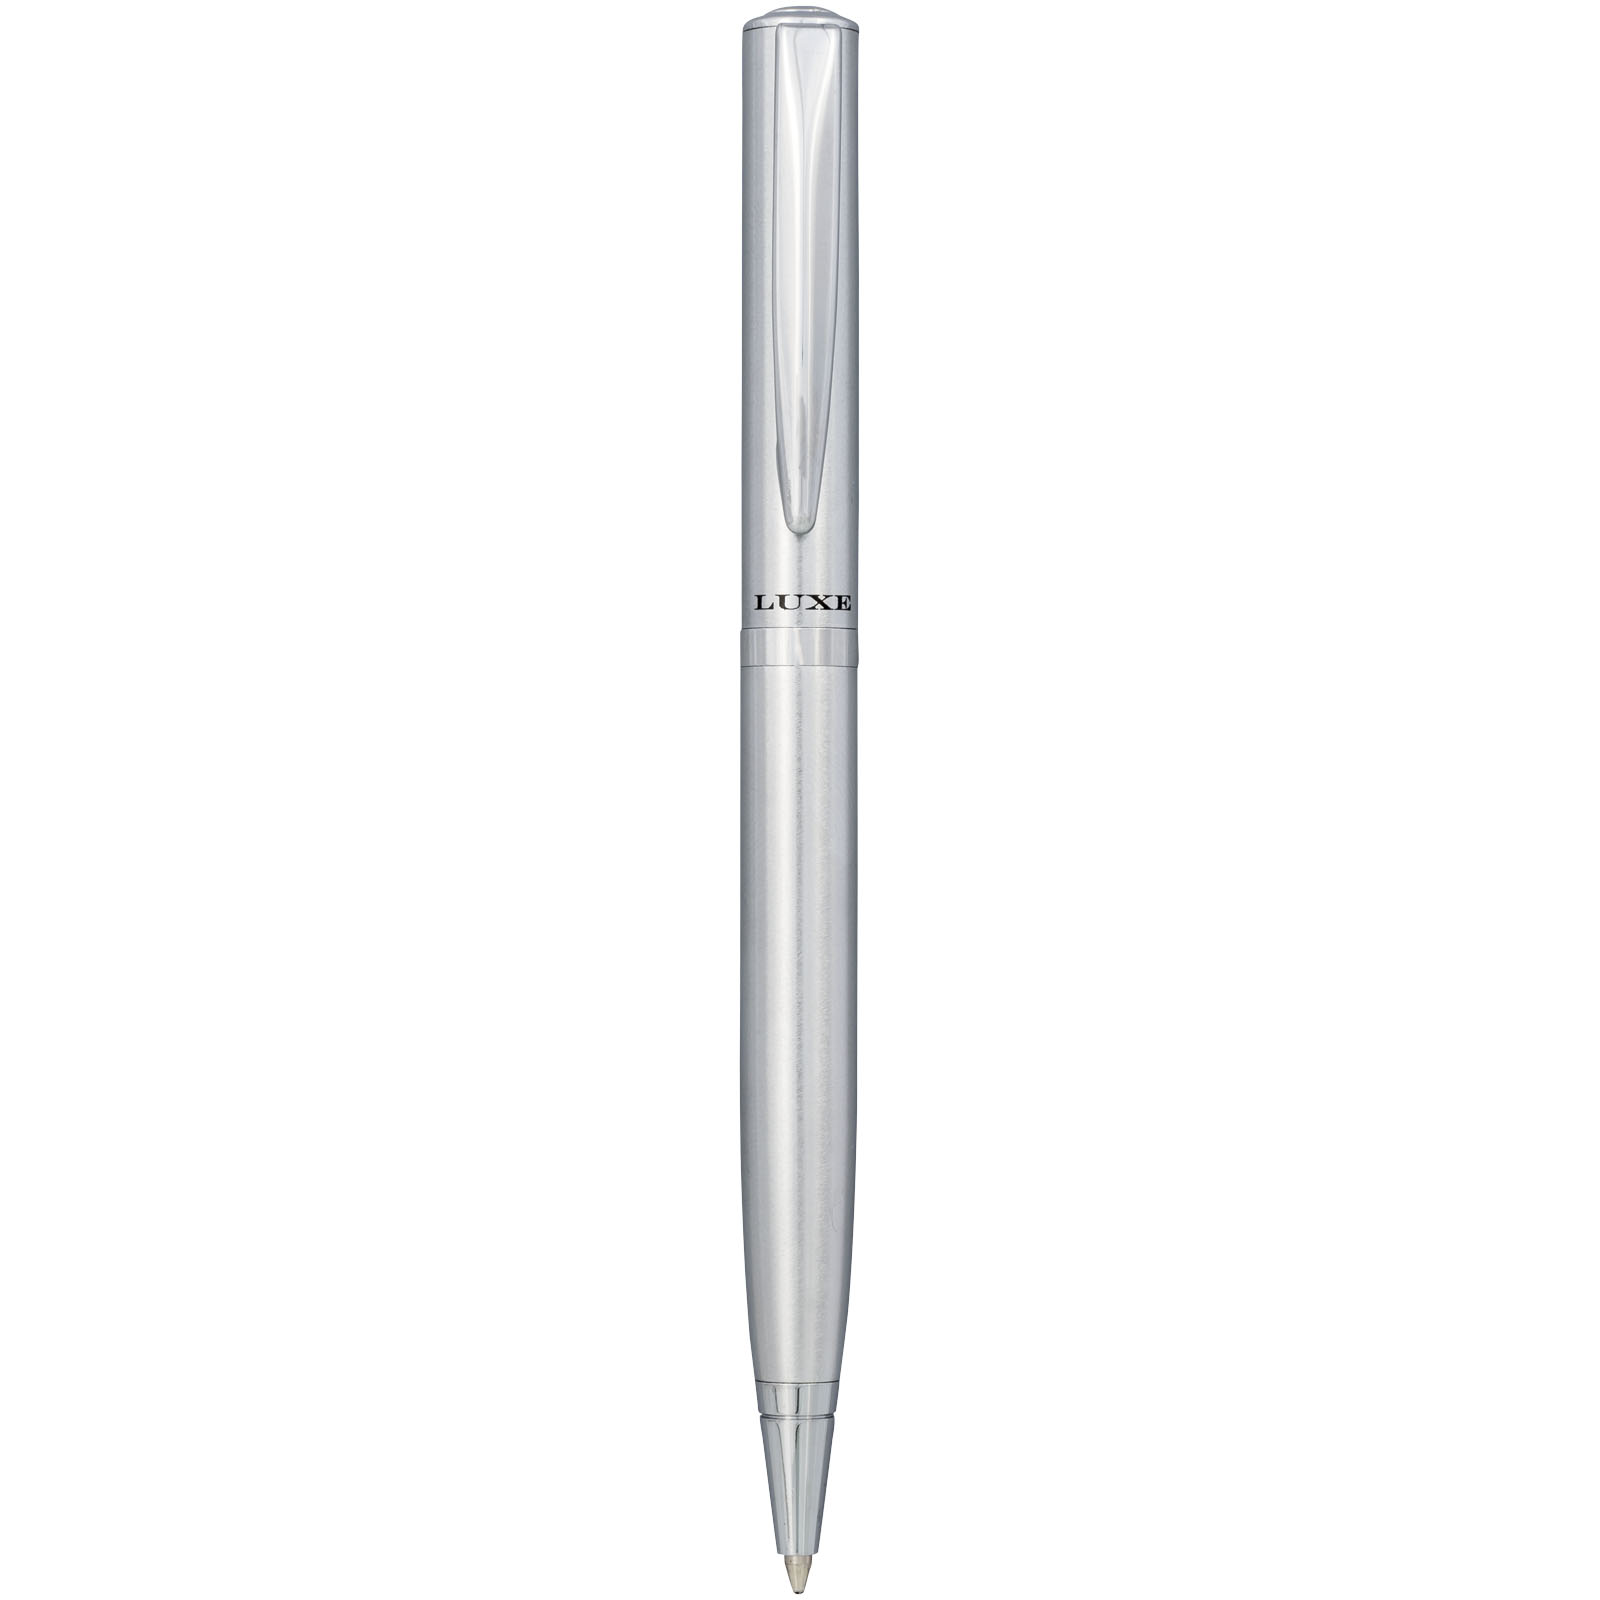 Advertising Ballpoint Pens - City ballpoint pen - 1